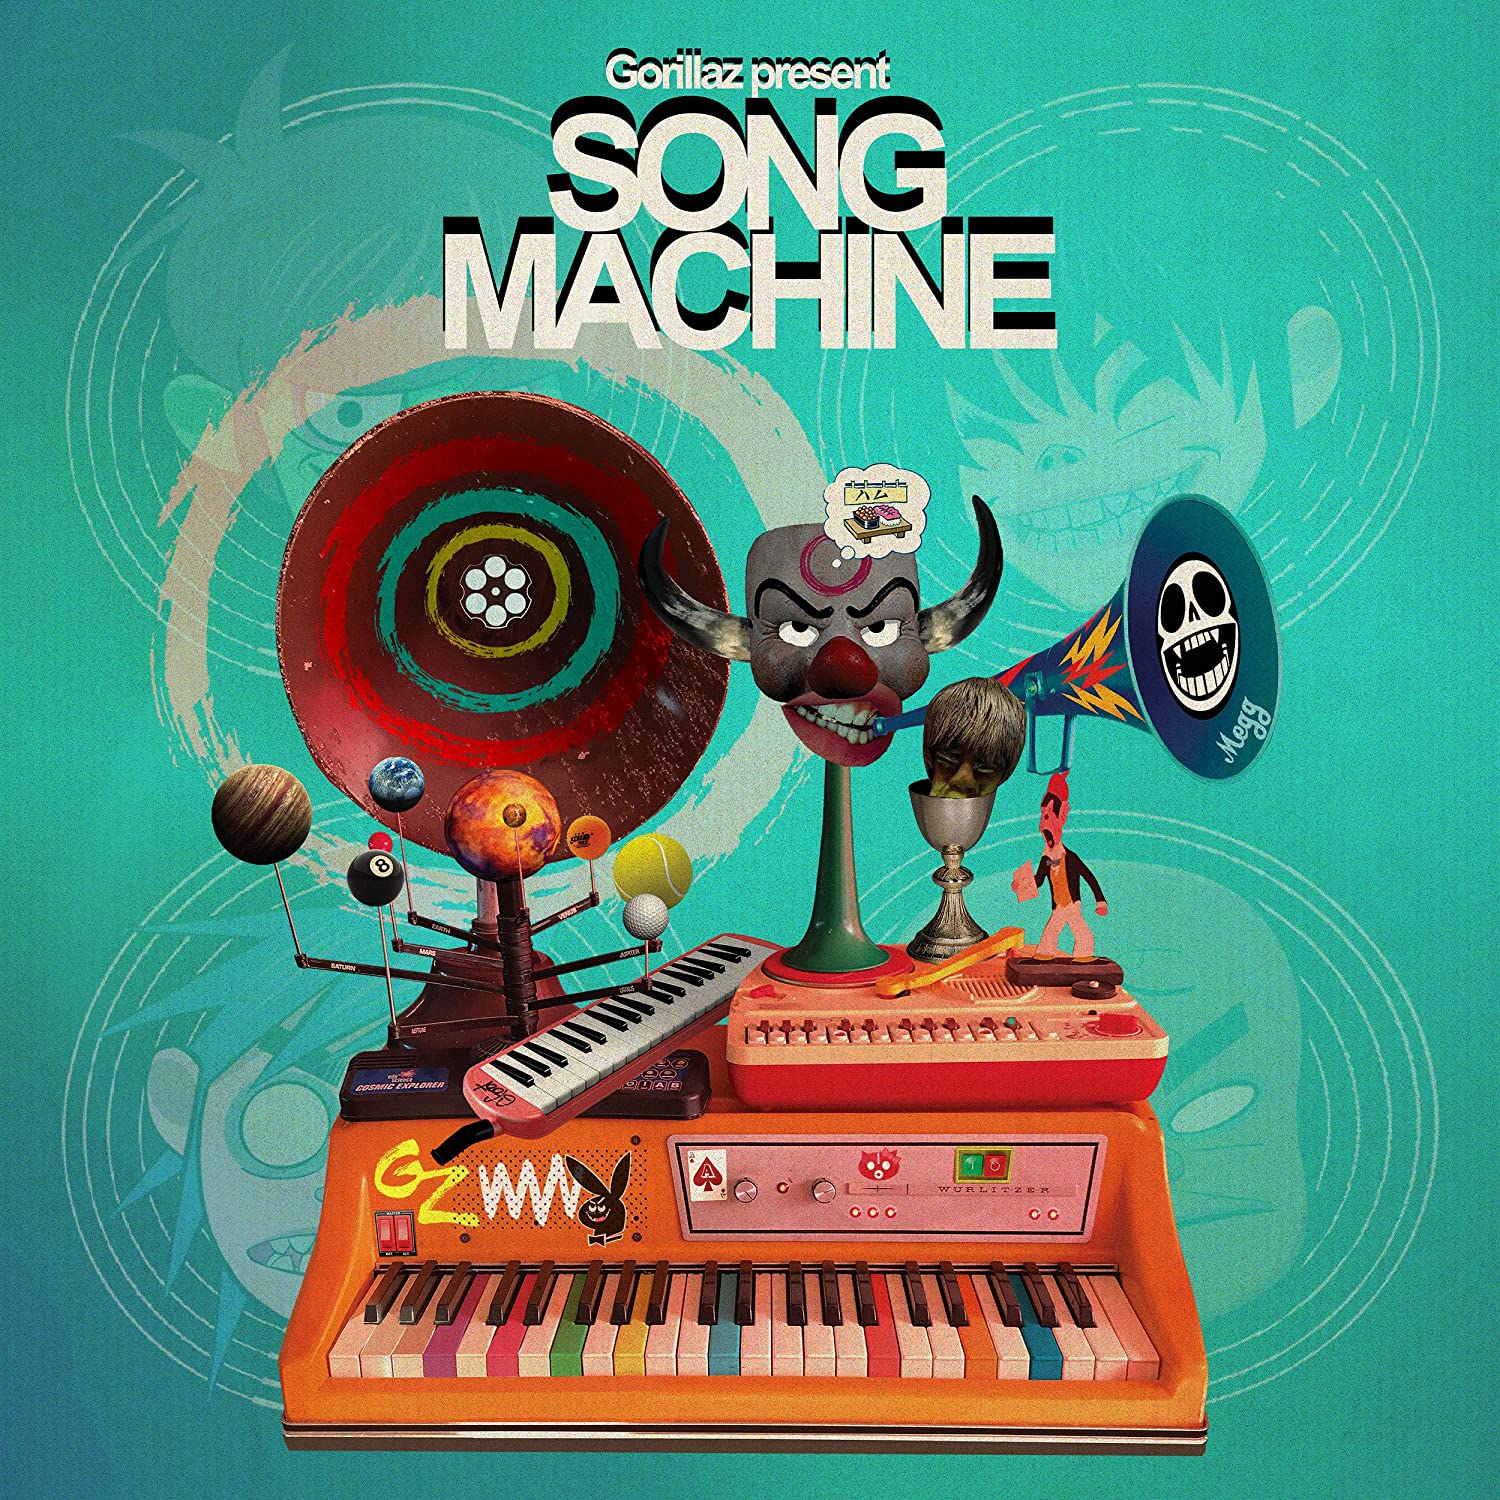 Gorillaz - Song Machine, Season 1 - Foto 1 di 1